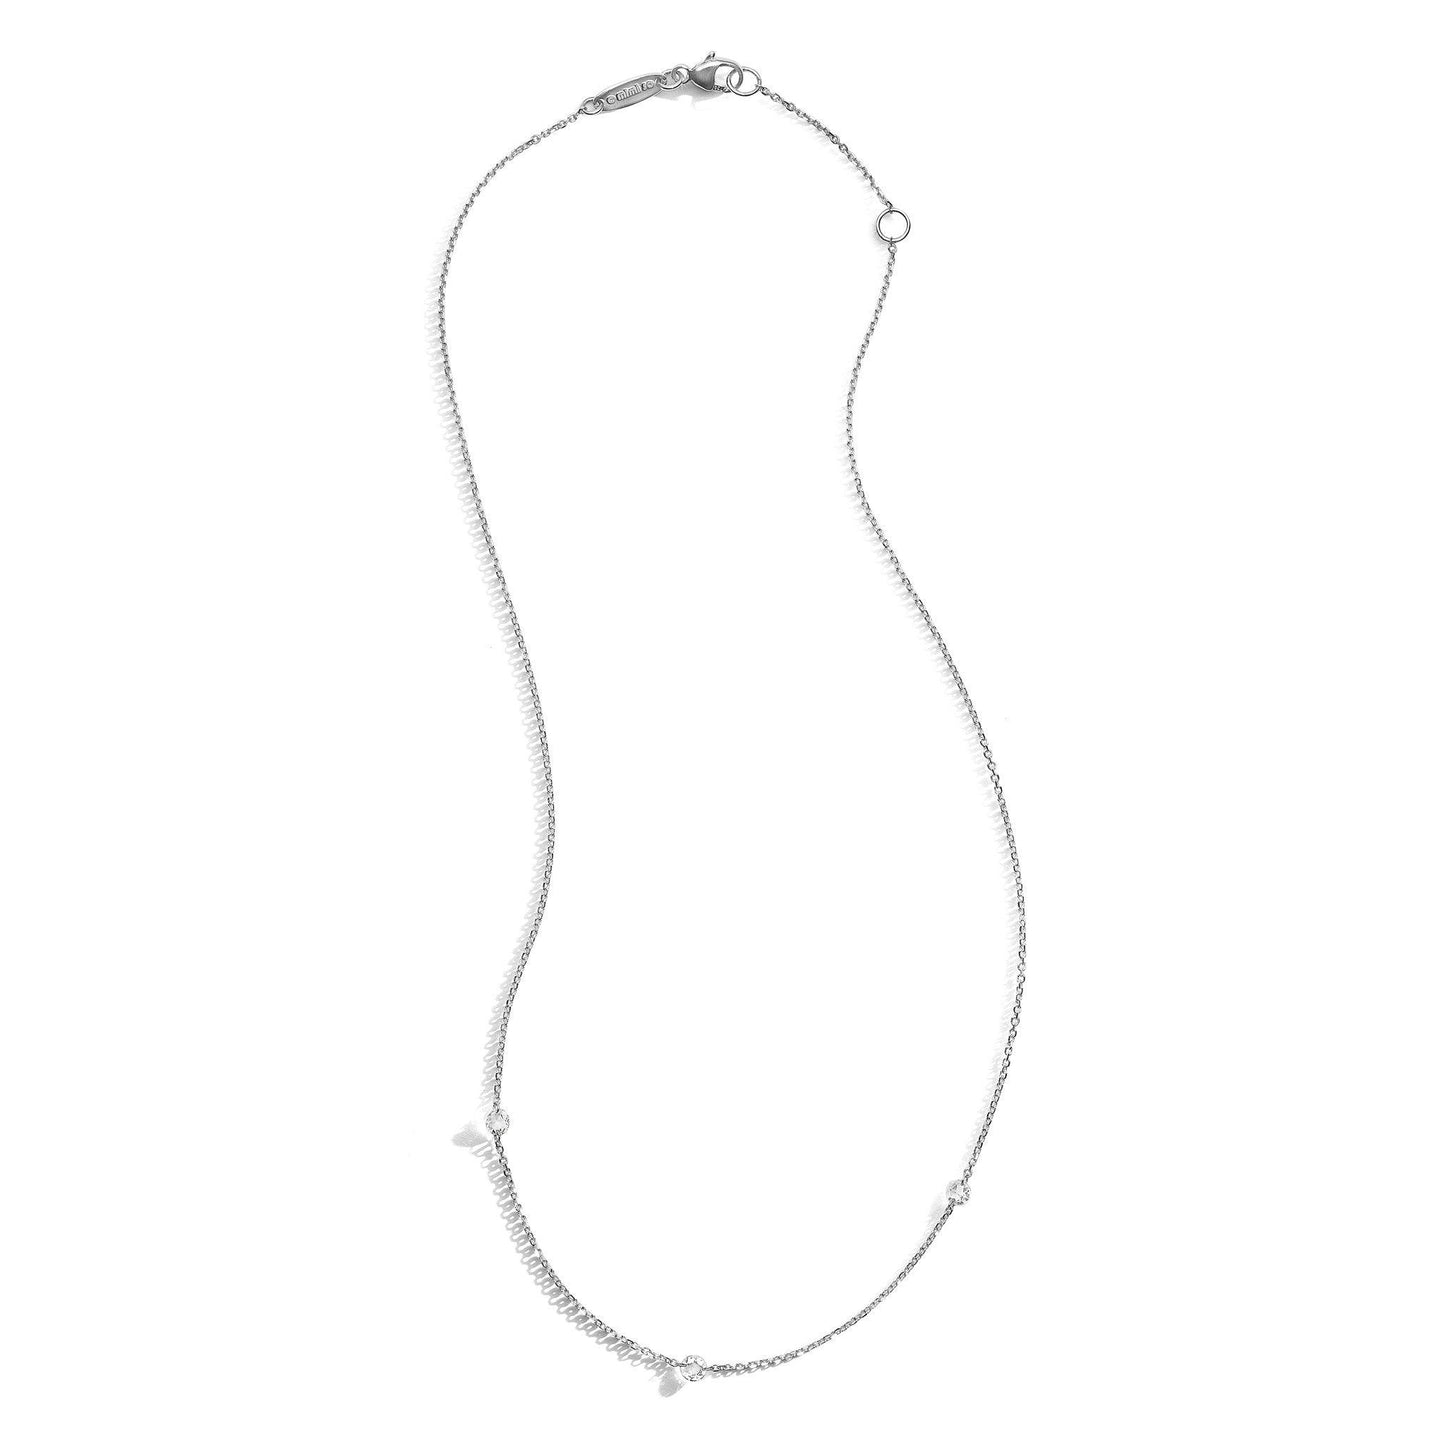 Mimi-Rosette-Necklaces-3-Stones_18k White Gold